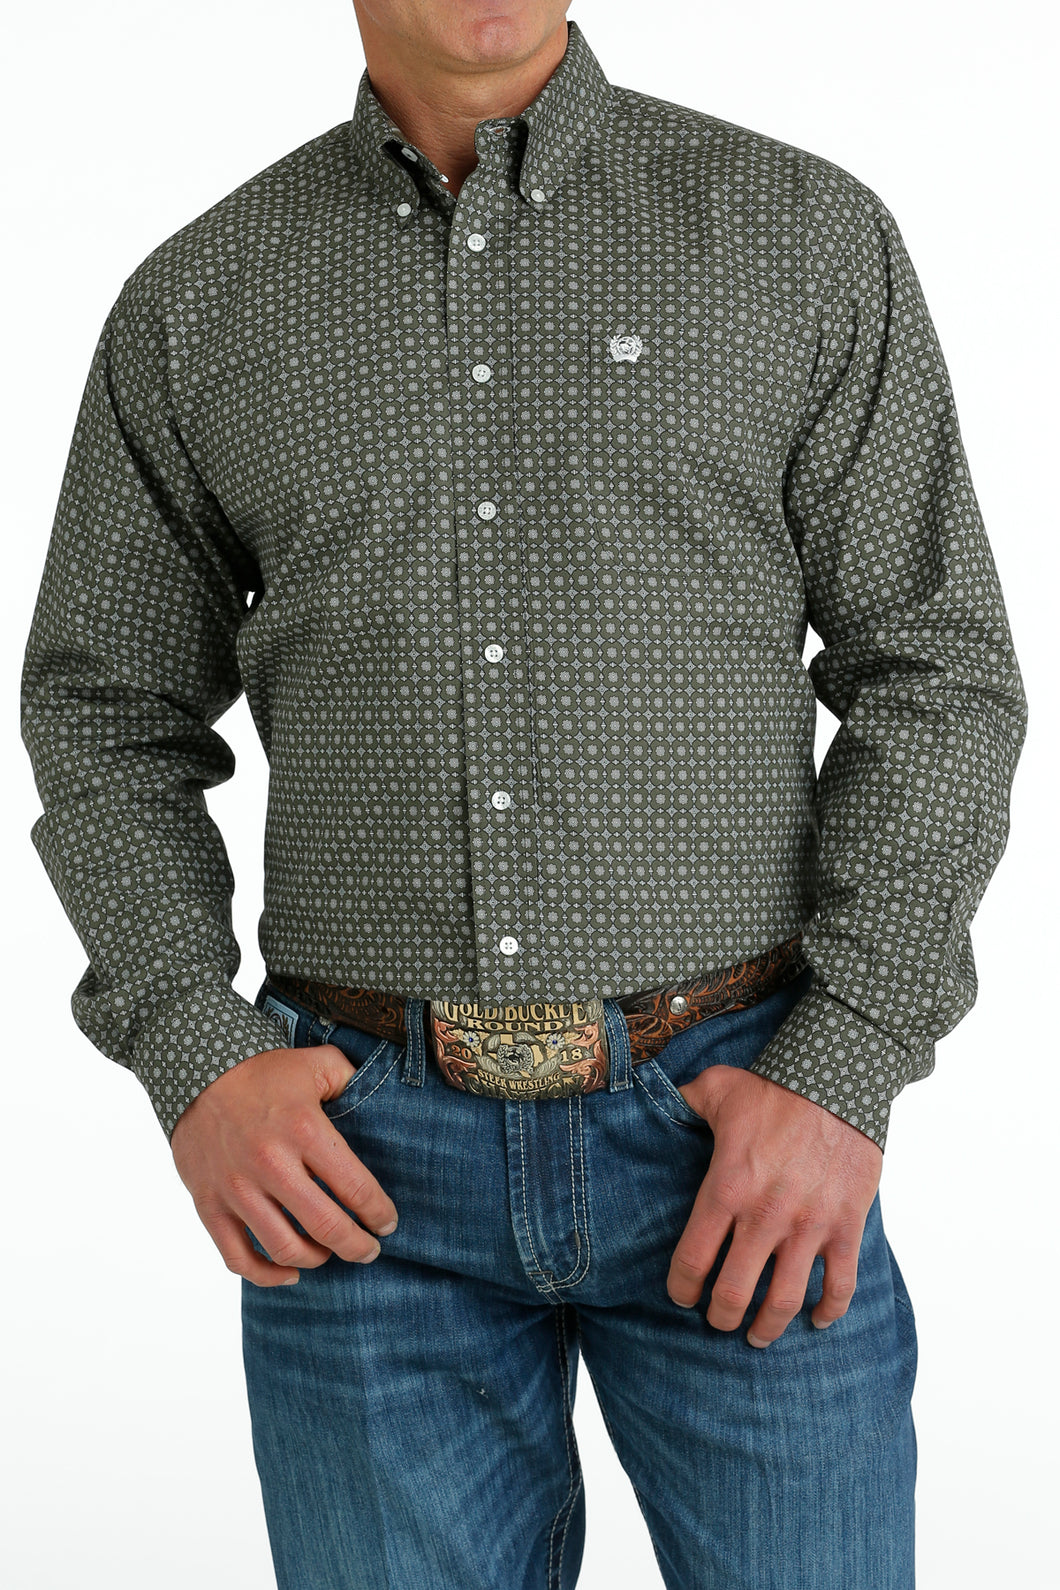 Pard's Western Shop Cinch Men's Olive Geometric Print Button-Down Shir